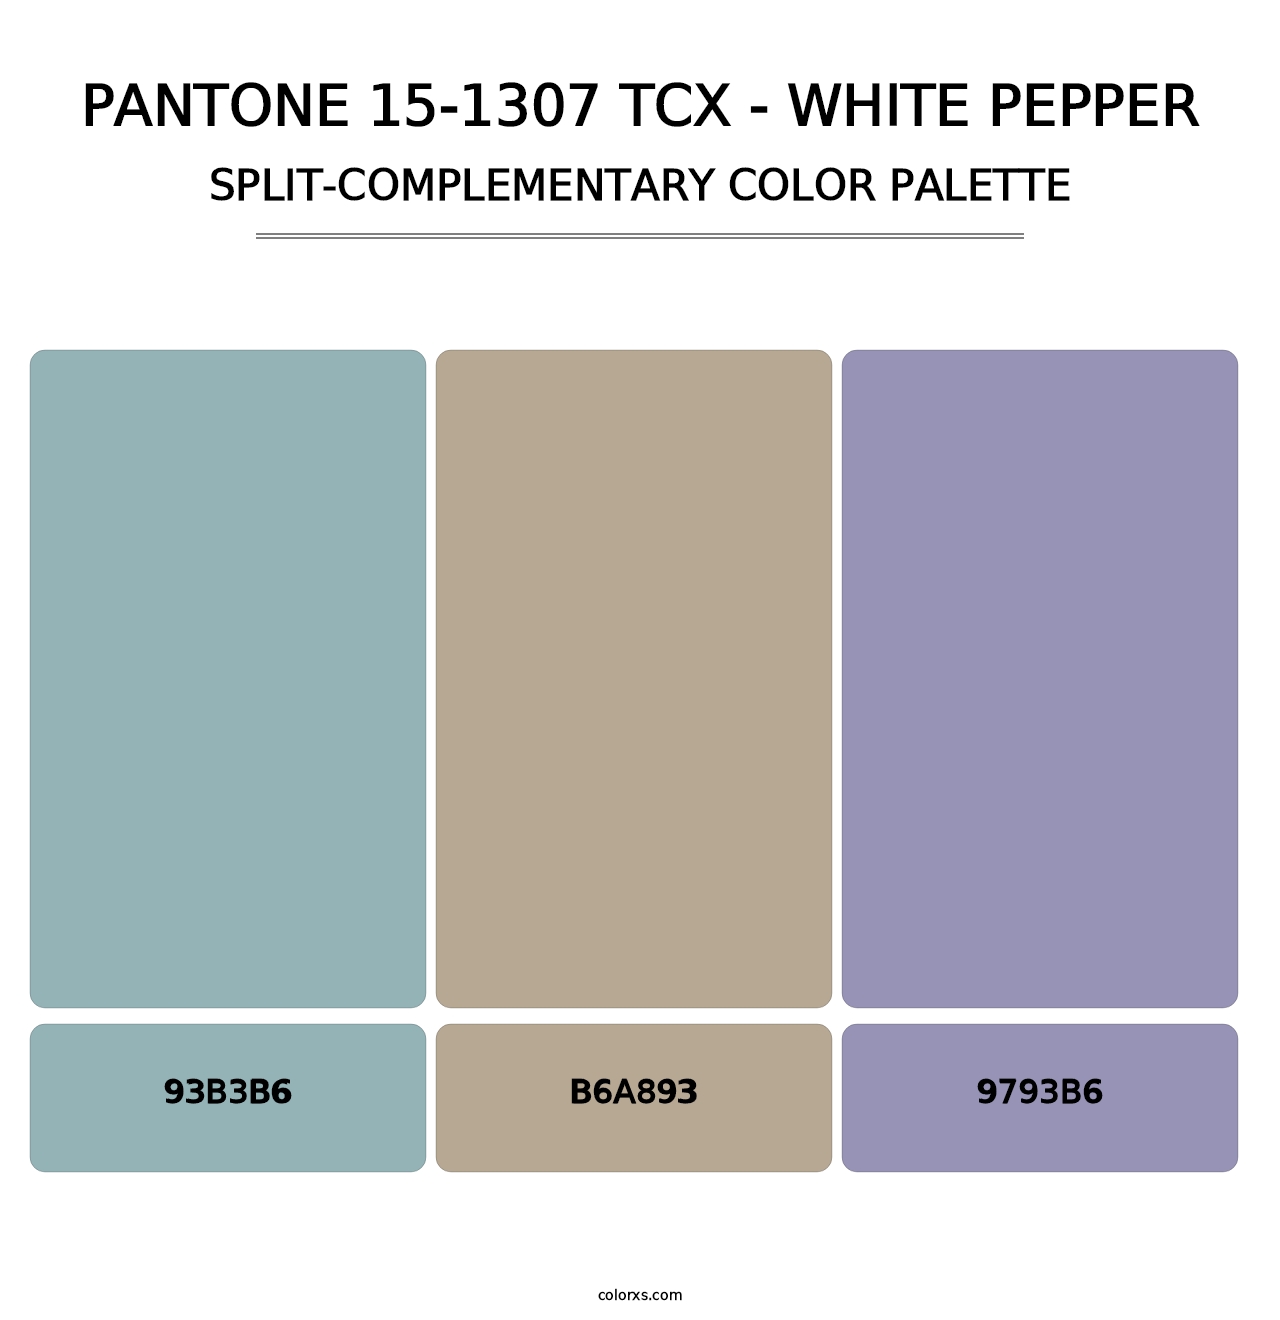 PANTONE 15-1307 TCX - White Pepper - Split-Complementary Color Palette